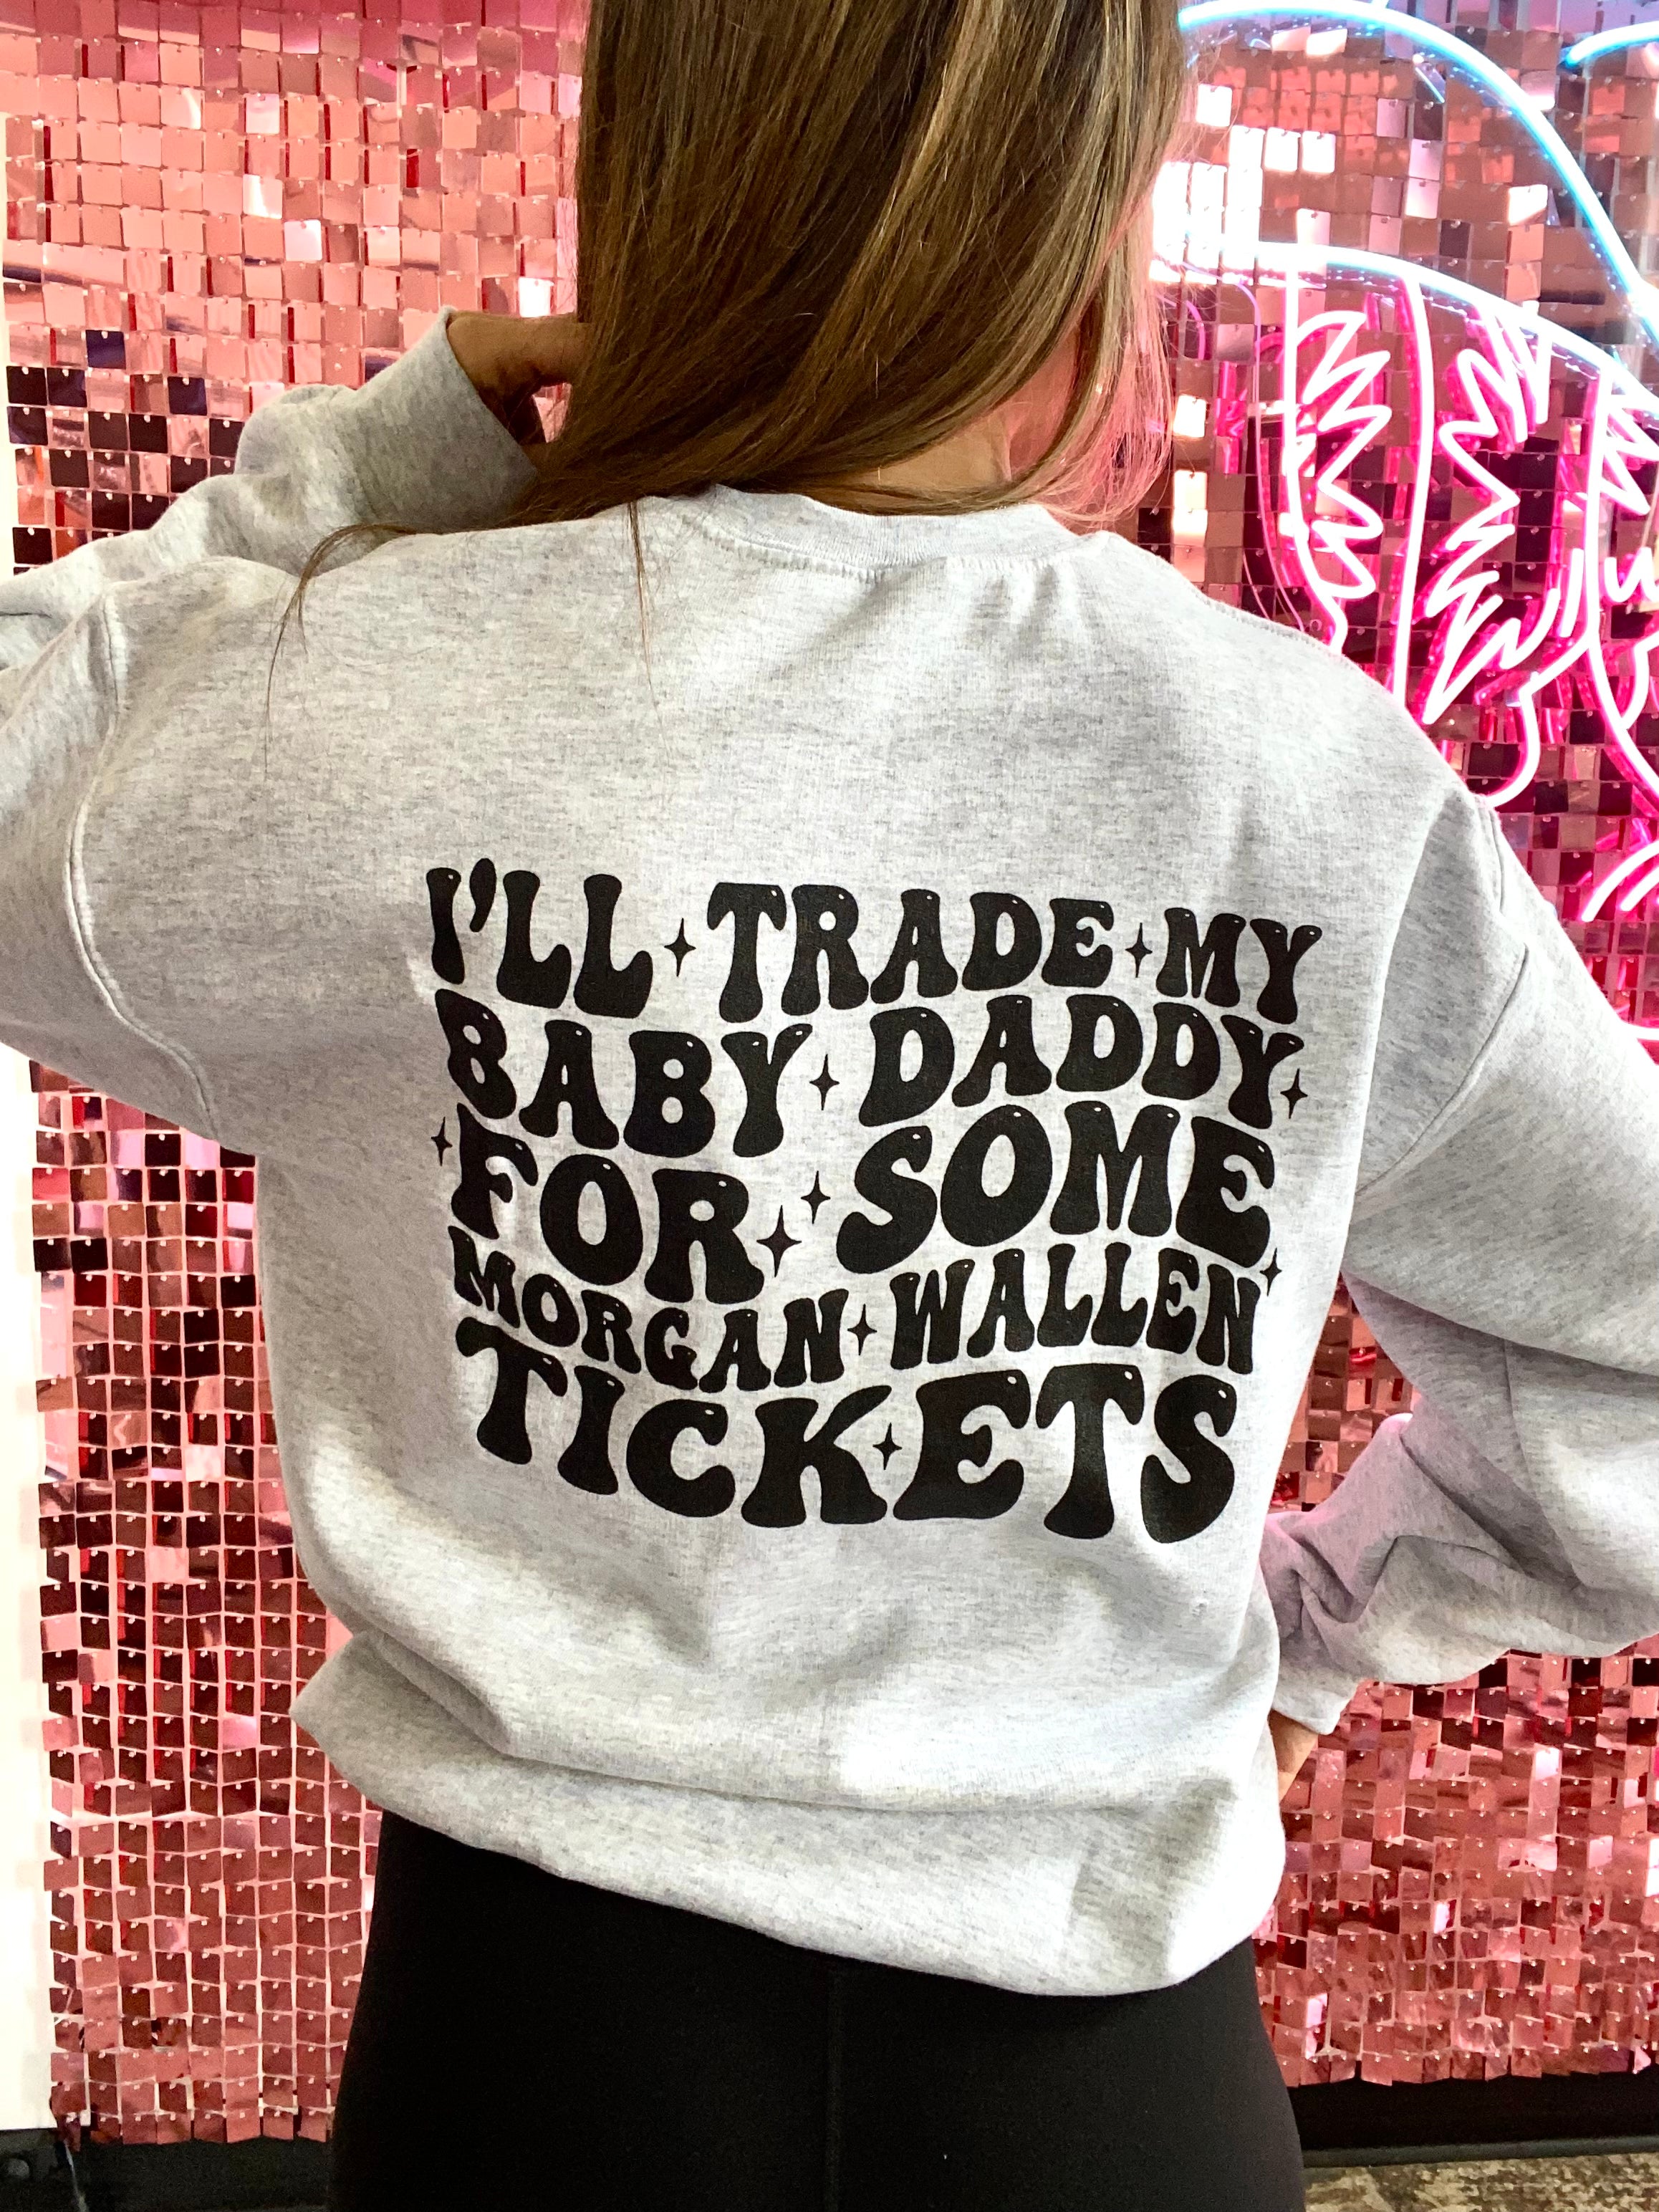 Will Trade Baby Daddy For Wallen Tickets Crewneck- Grey